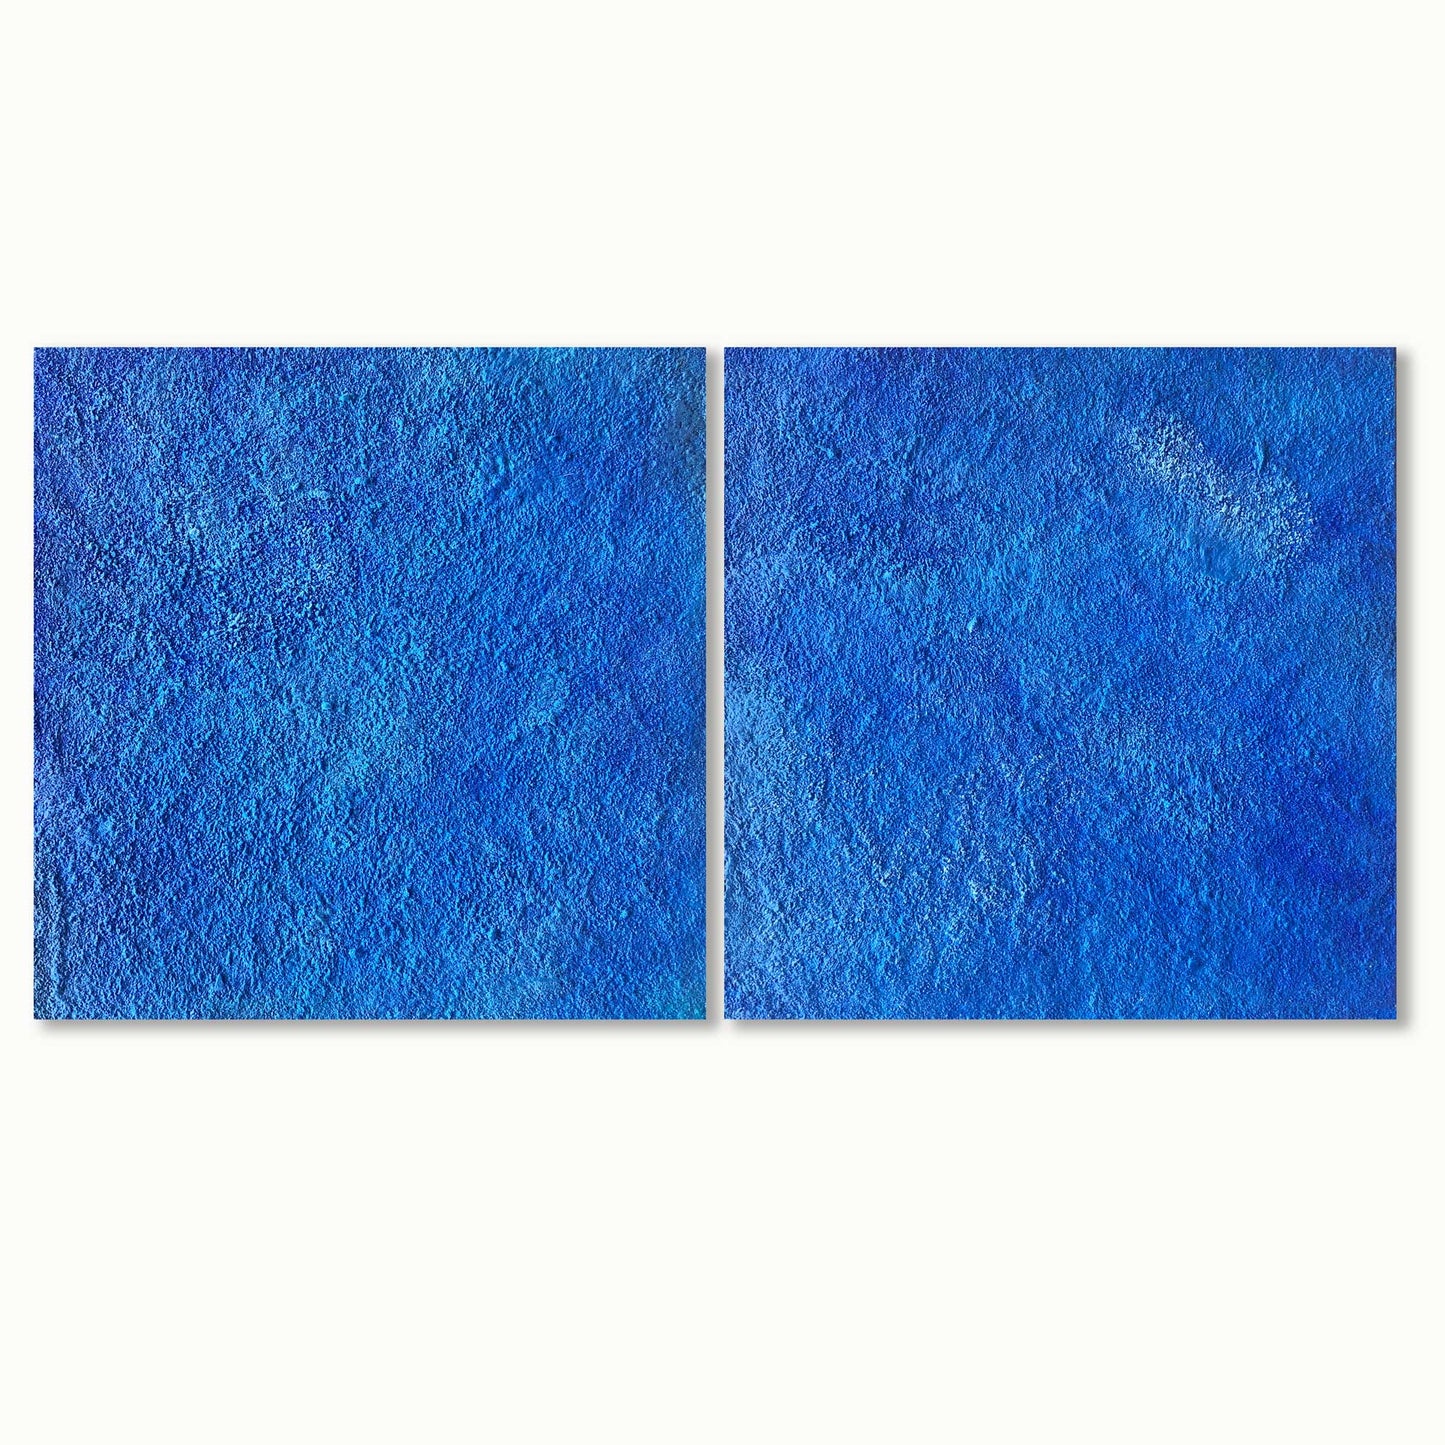 ENW-NB-008 "New Beginning" #8 (10x20x.875) Both Panels original encaustic abstract painting by Chizu Omori Art